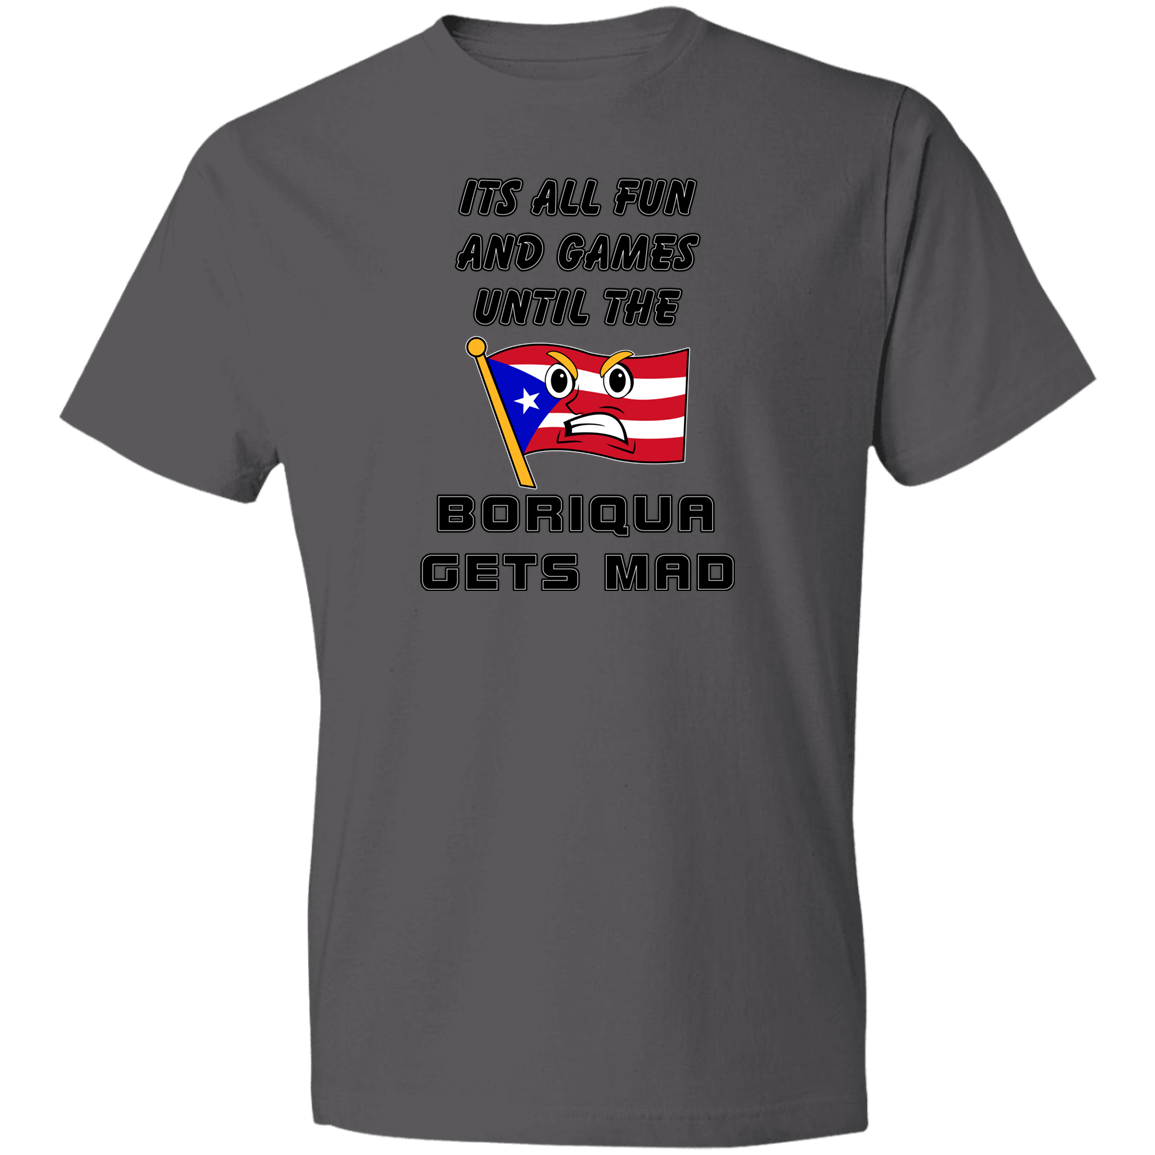 Fun and Games T-Shirt 4.5 oz - Puerto Rican Pride